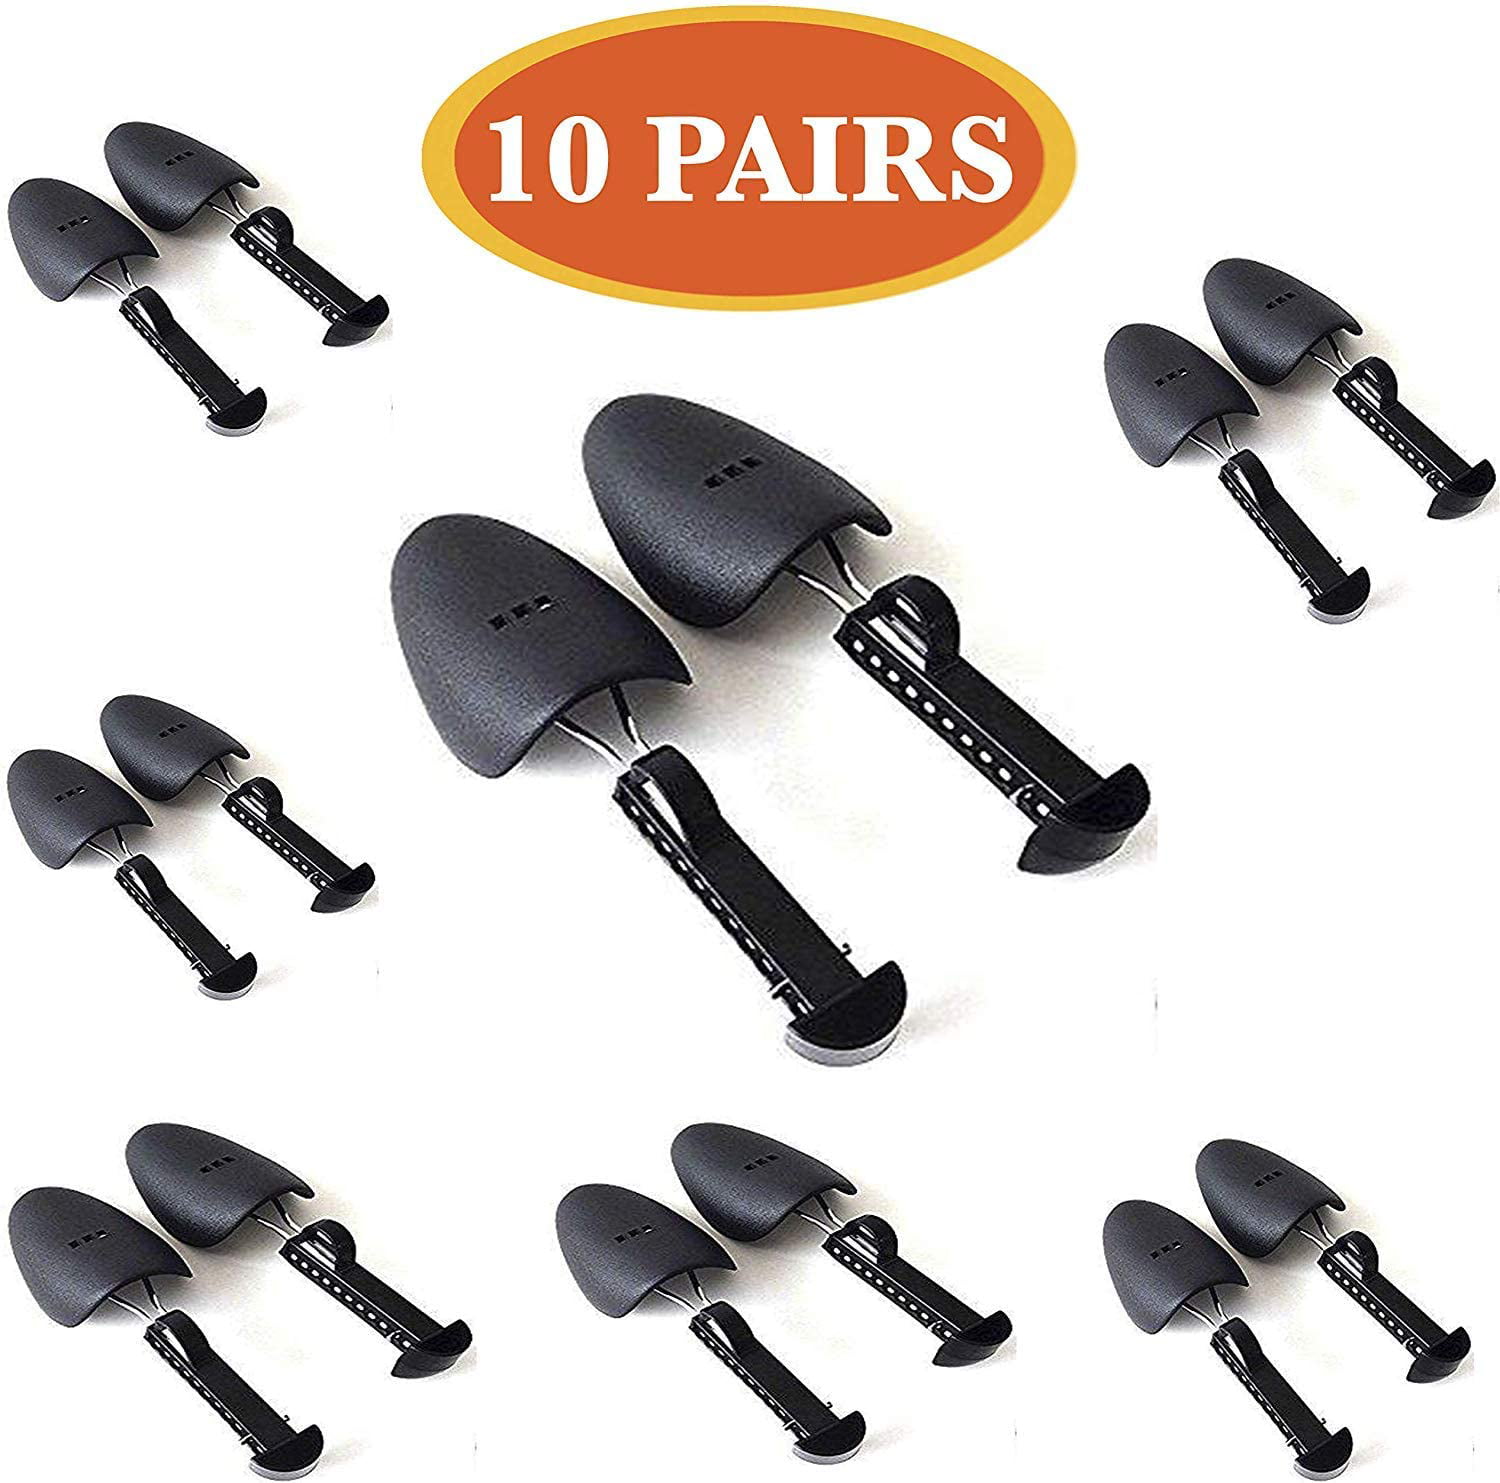 10 X Plastic Shoe Tree Shoes Shaper Shapes Stretcher  Adjustable 5-10 Uk Womens 